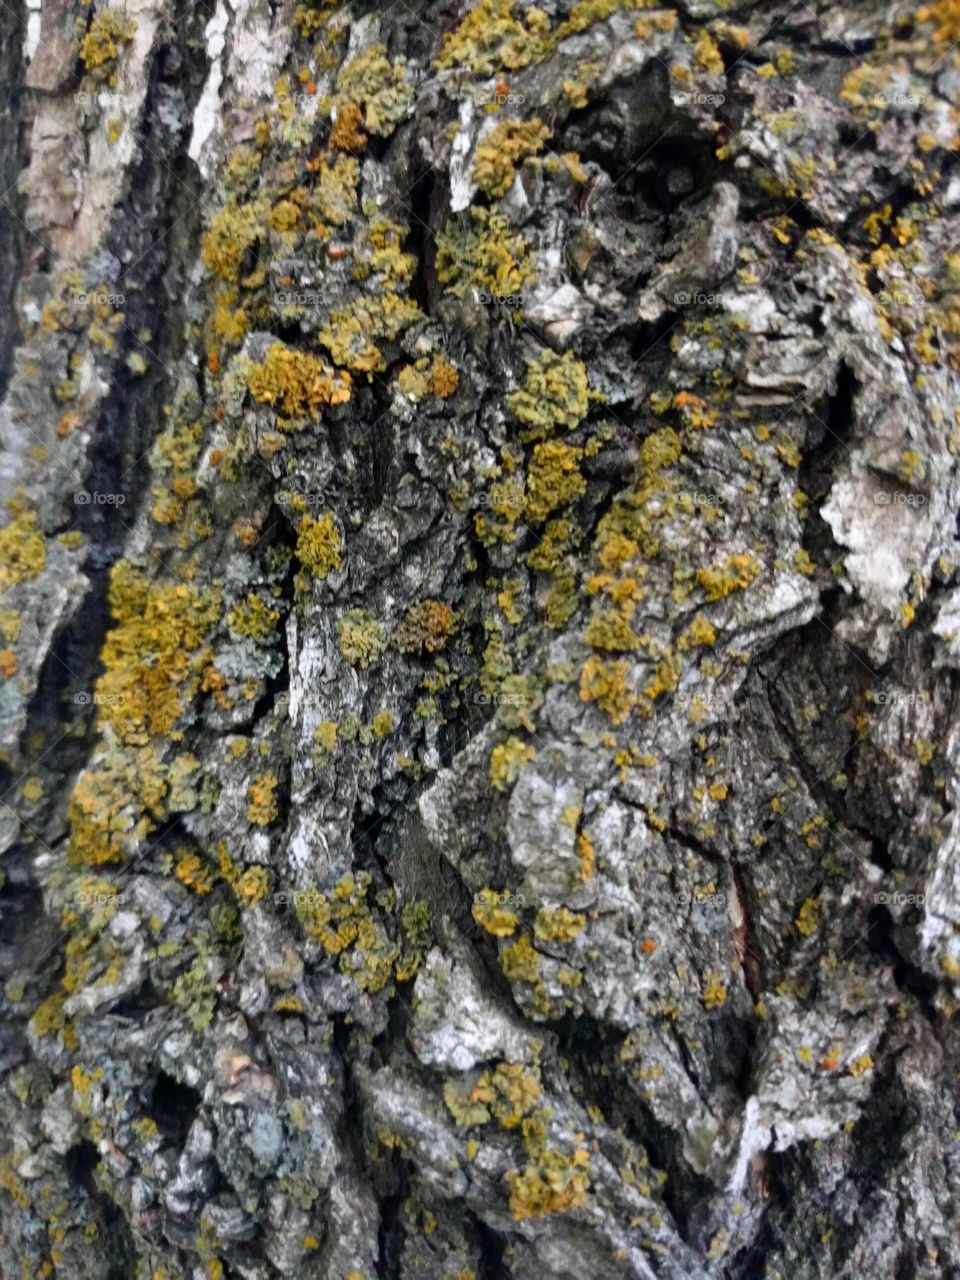 Moss/Lichen on Bark